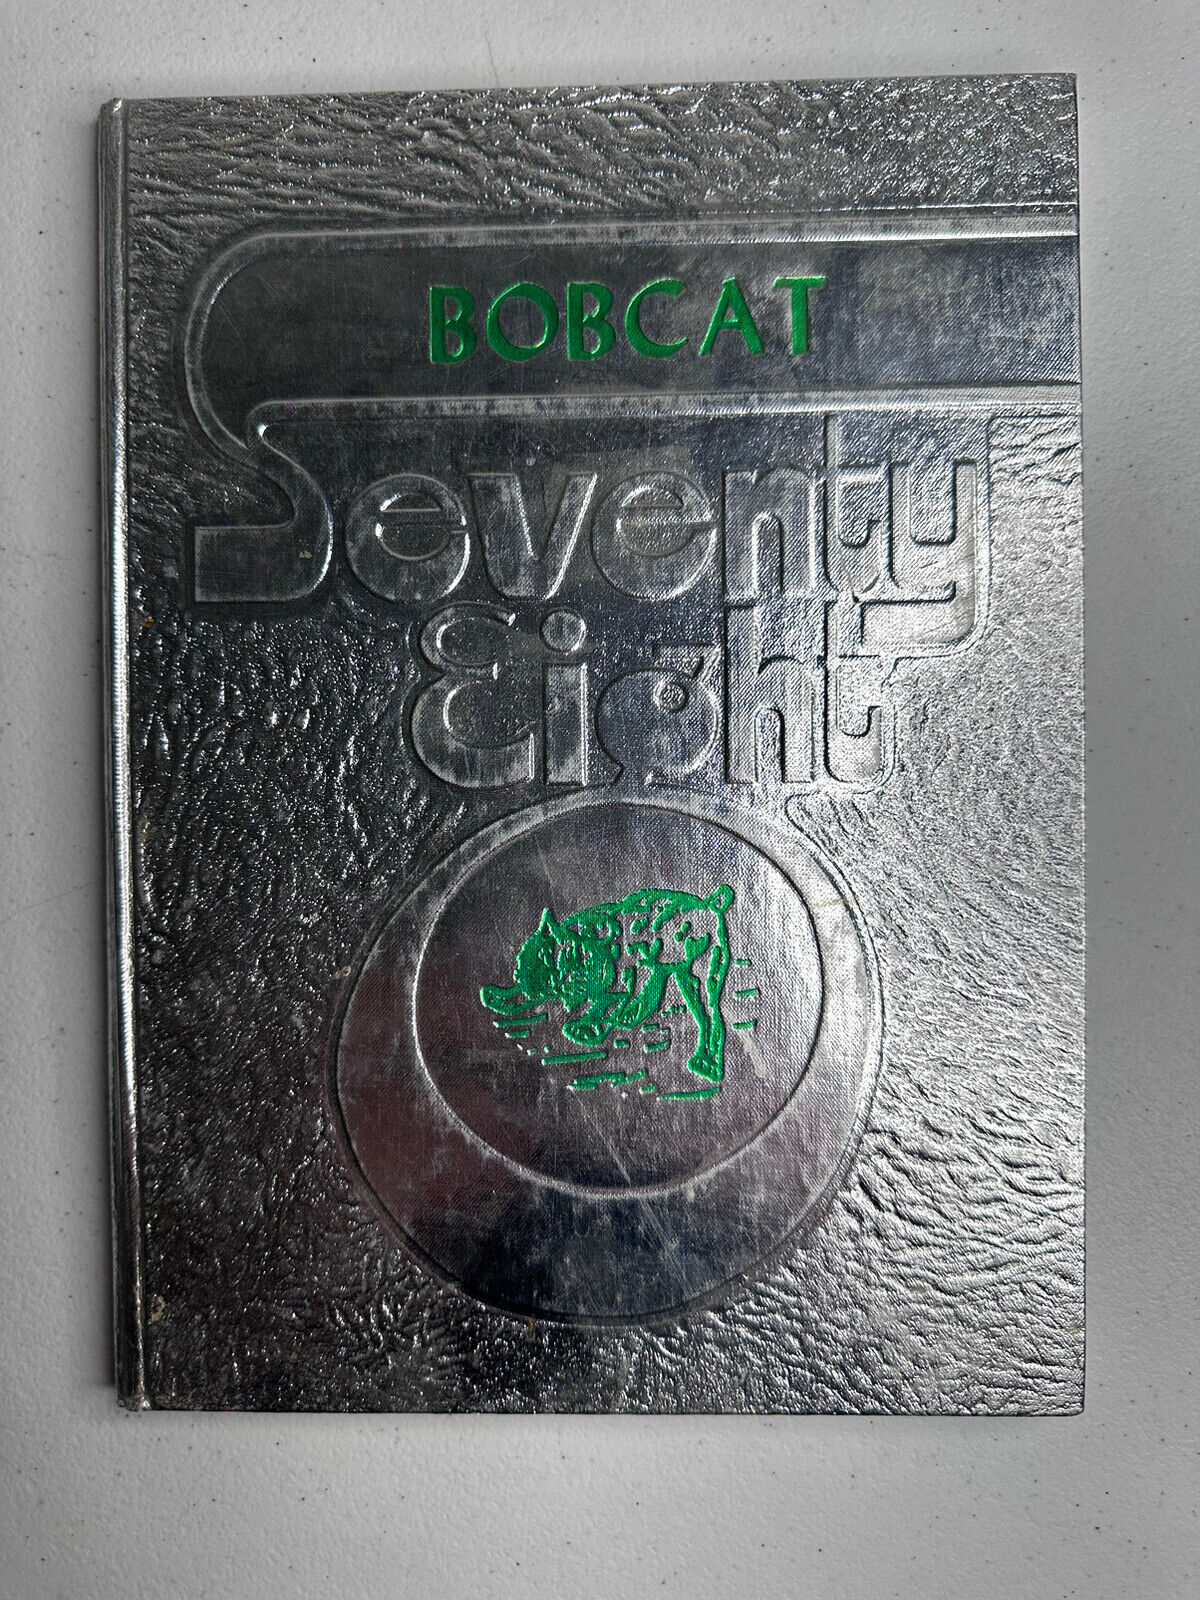 1978 Bobcat High School Yearbook - Signed & Preserved Vintage School Memories